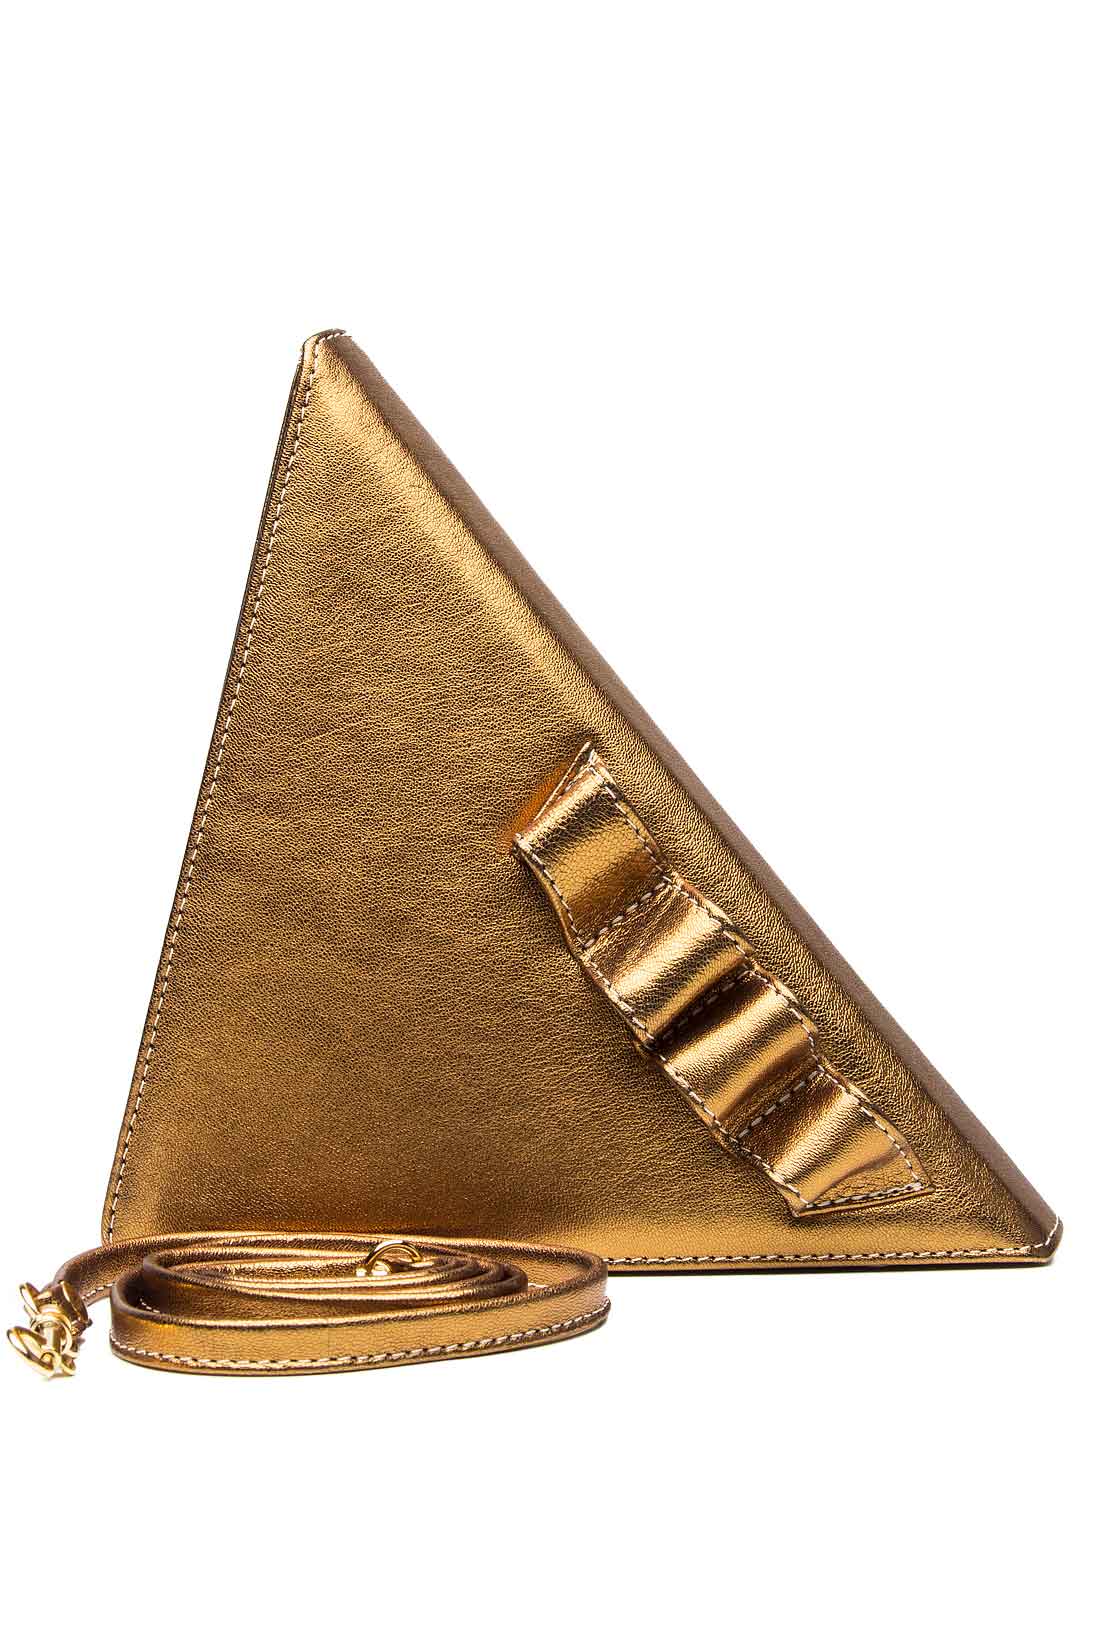 Leather triangle clutch Laura Olaru image 0